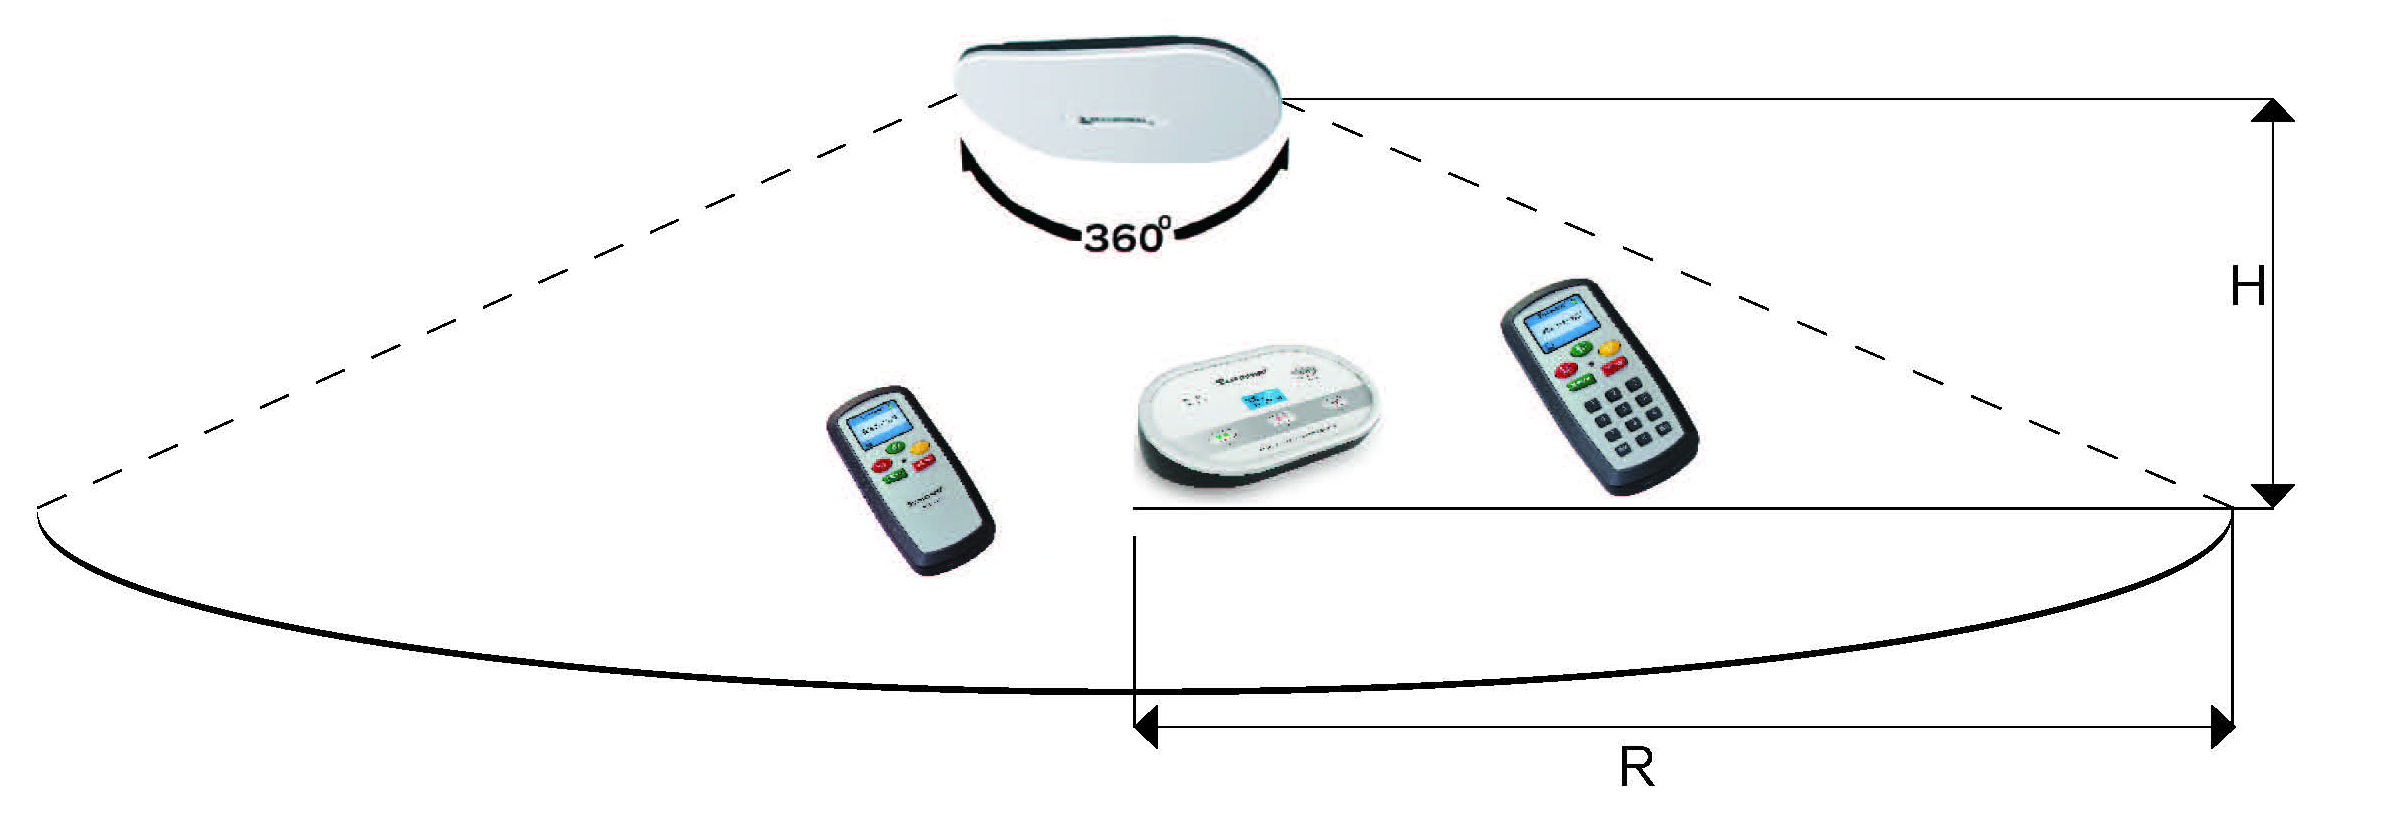 Wireless voting system-Full digital wireless 3 keys voting RX-D2833